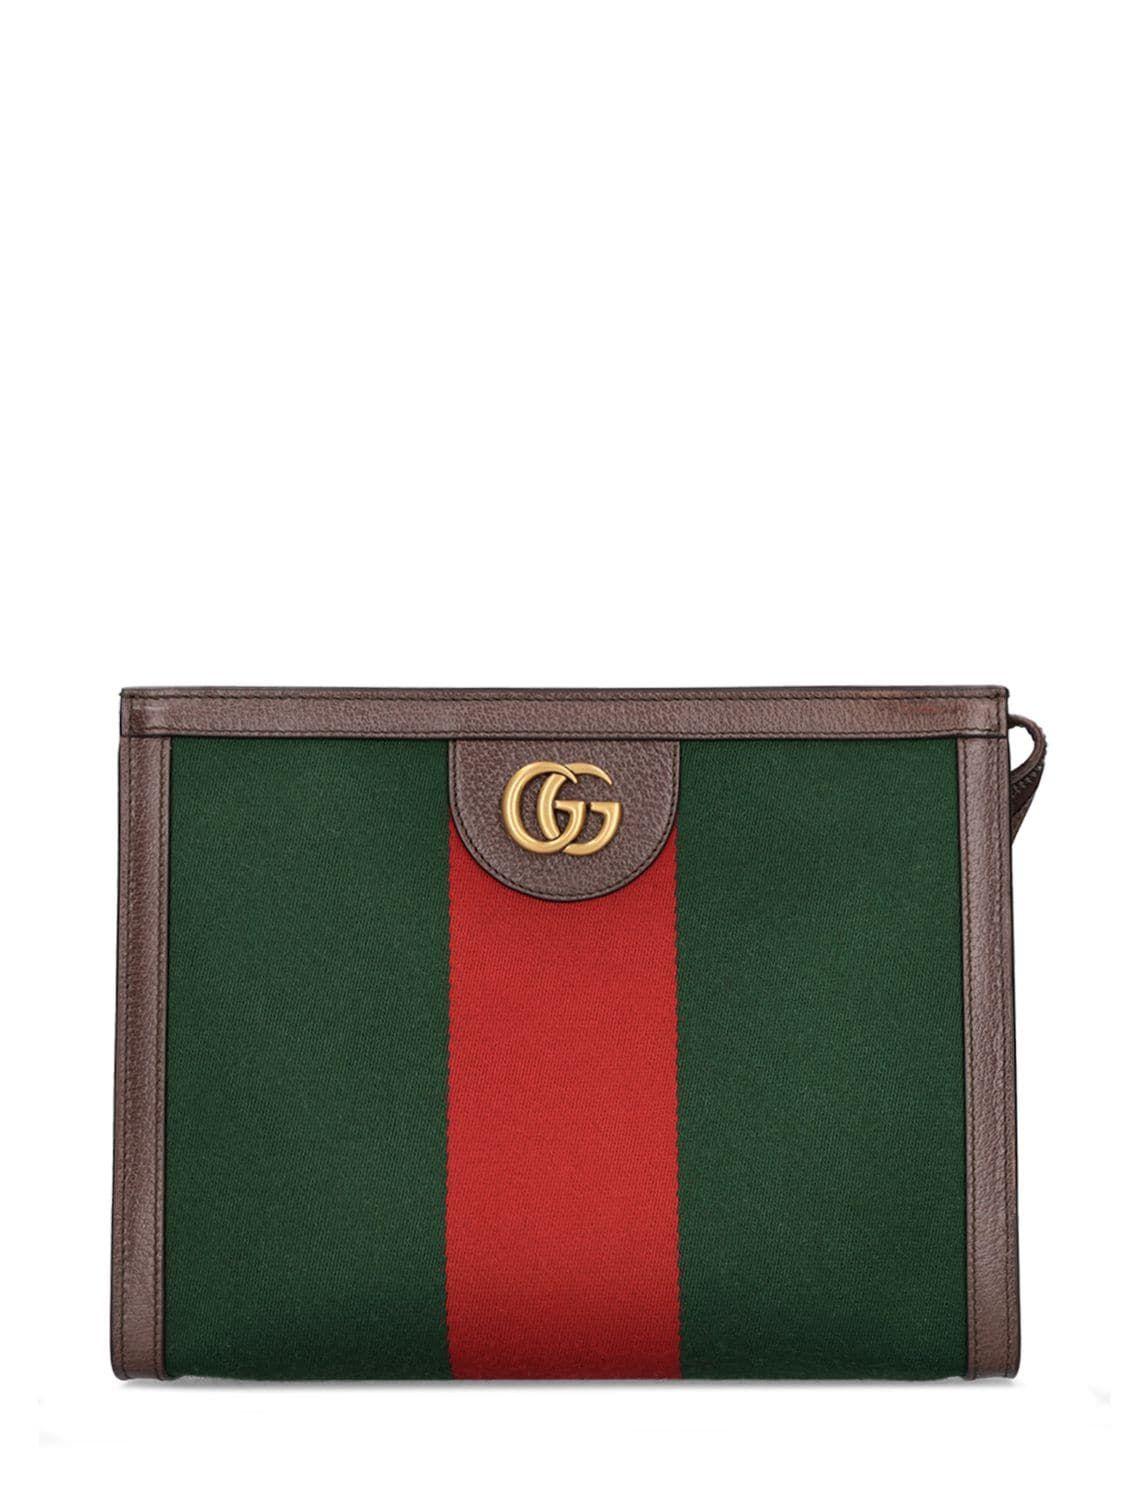 Gucci Web GG Supreme Messenger Bag in Green for Men